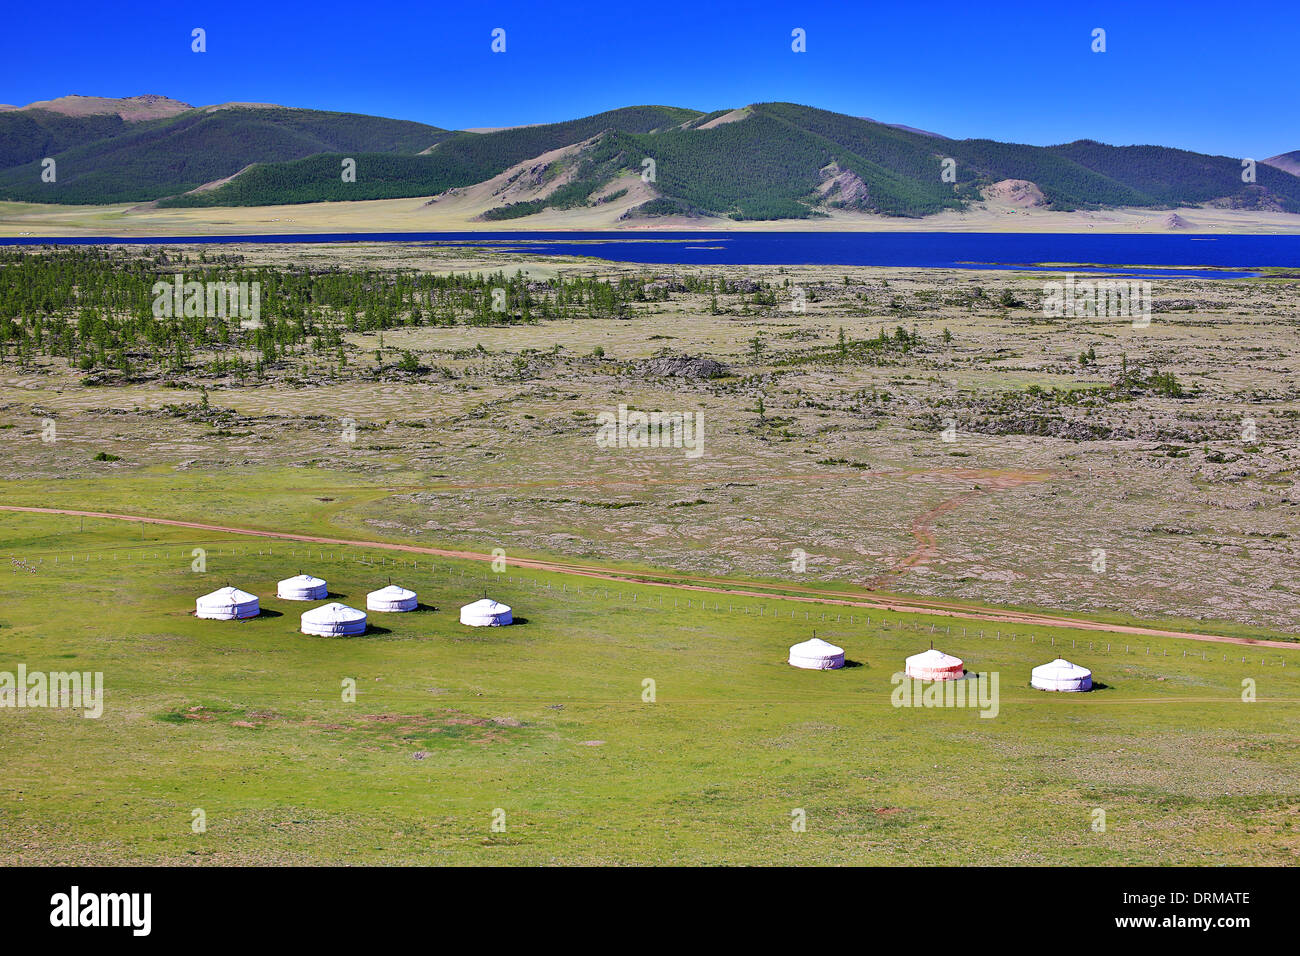 Yurt settlements, Terkhiin Tsagaan Lake, central mongolia Stock Photo